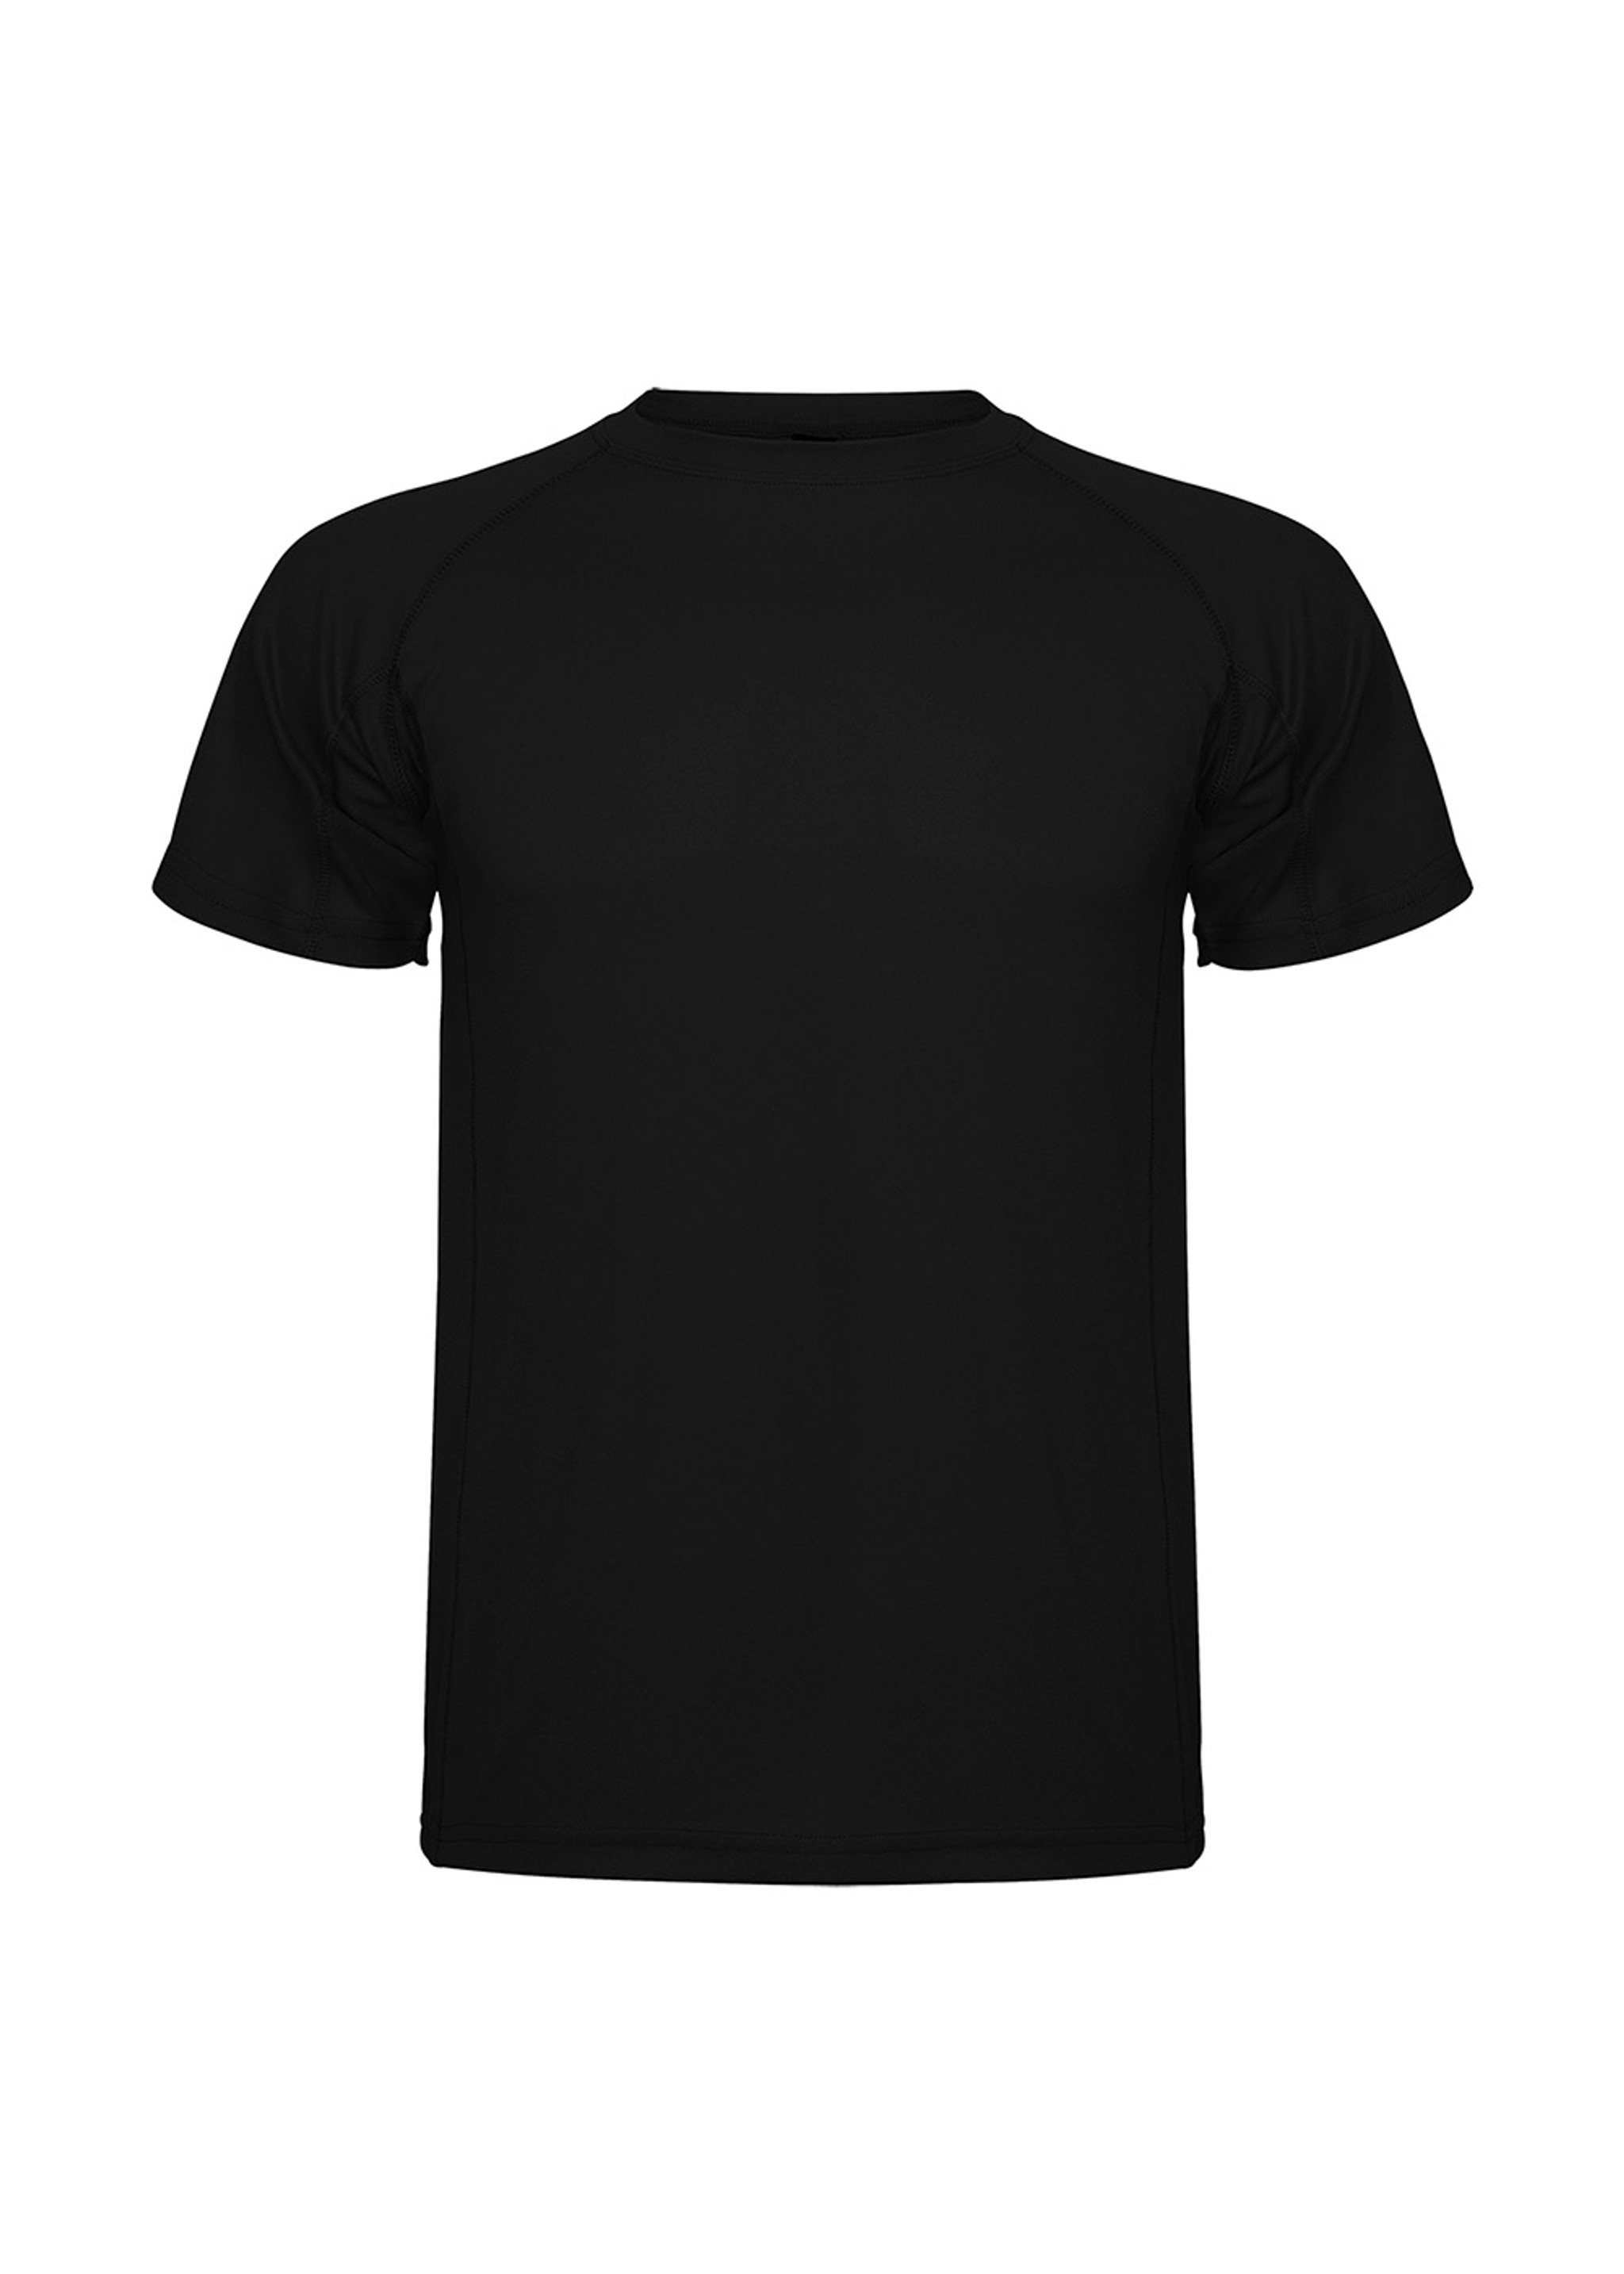 Trænings T-shirt Unisex Black